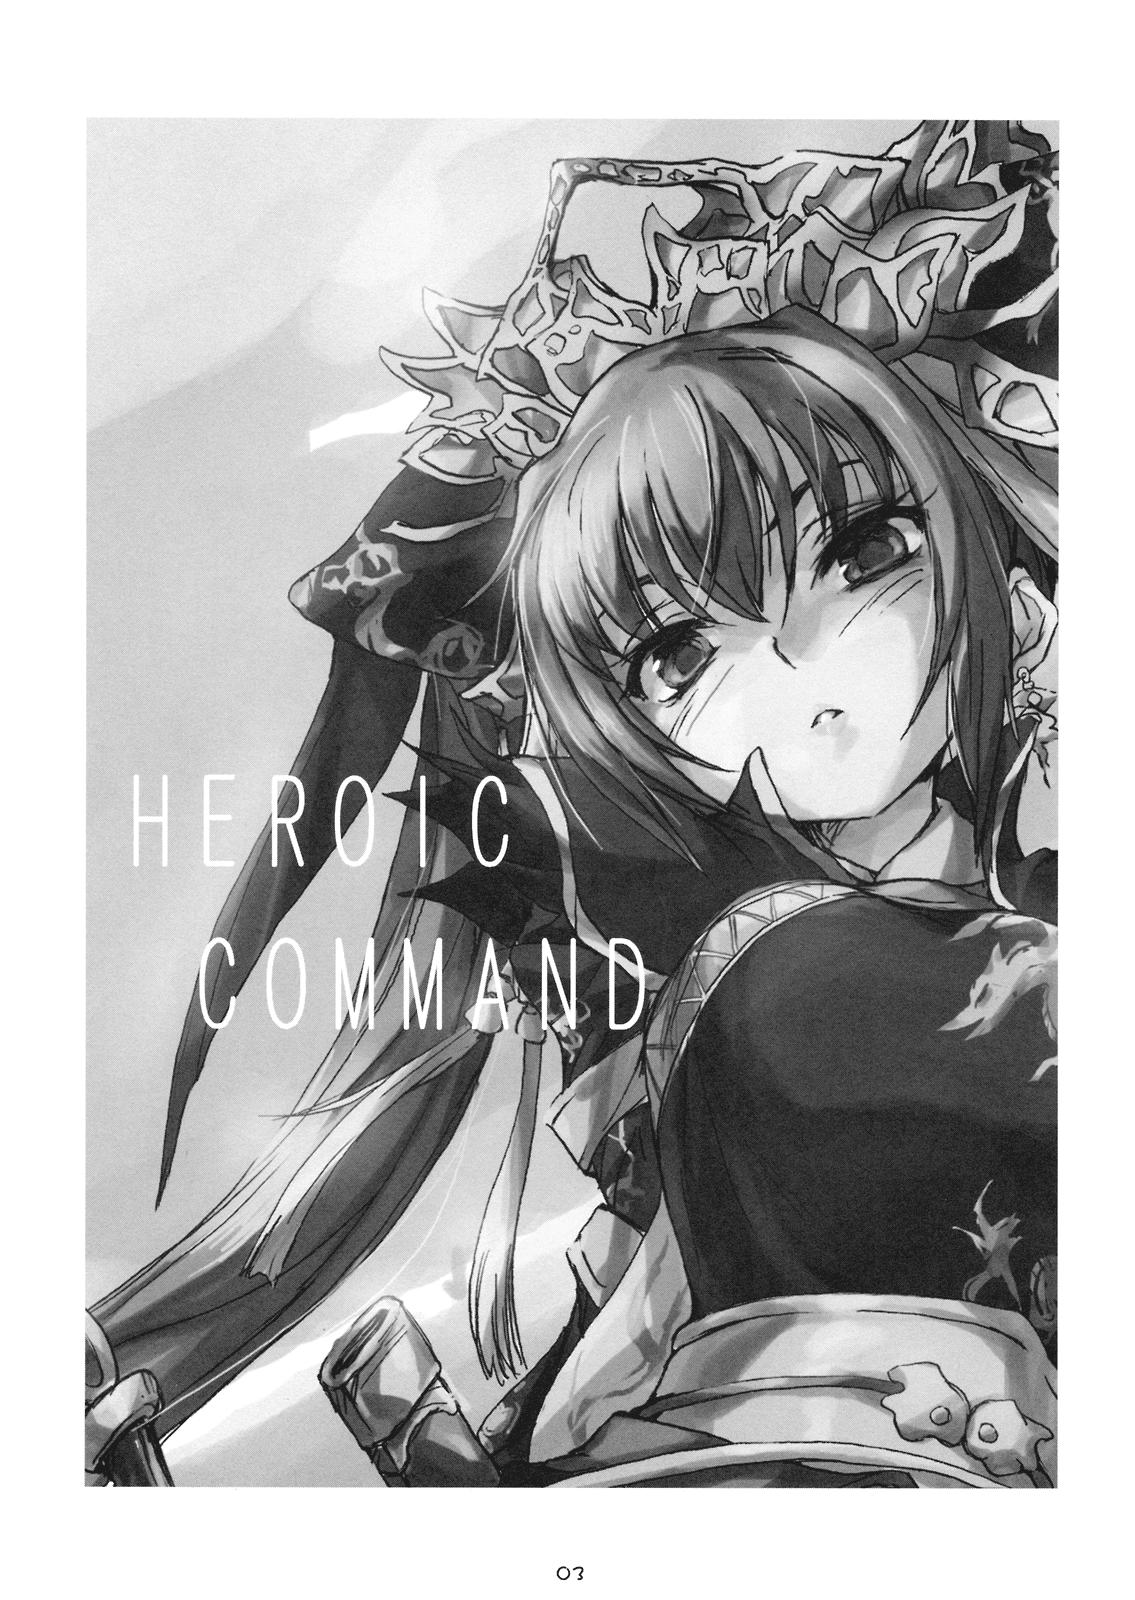 HEROIC COMMAND Beta Edition 2